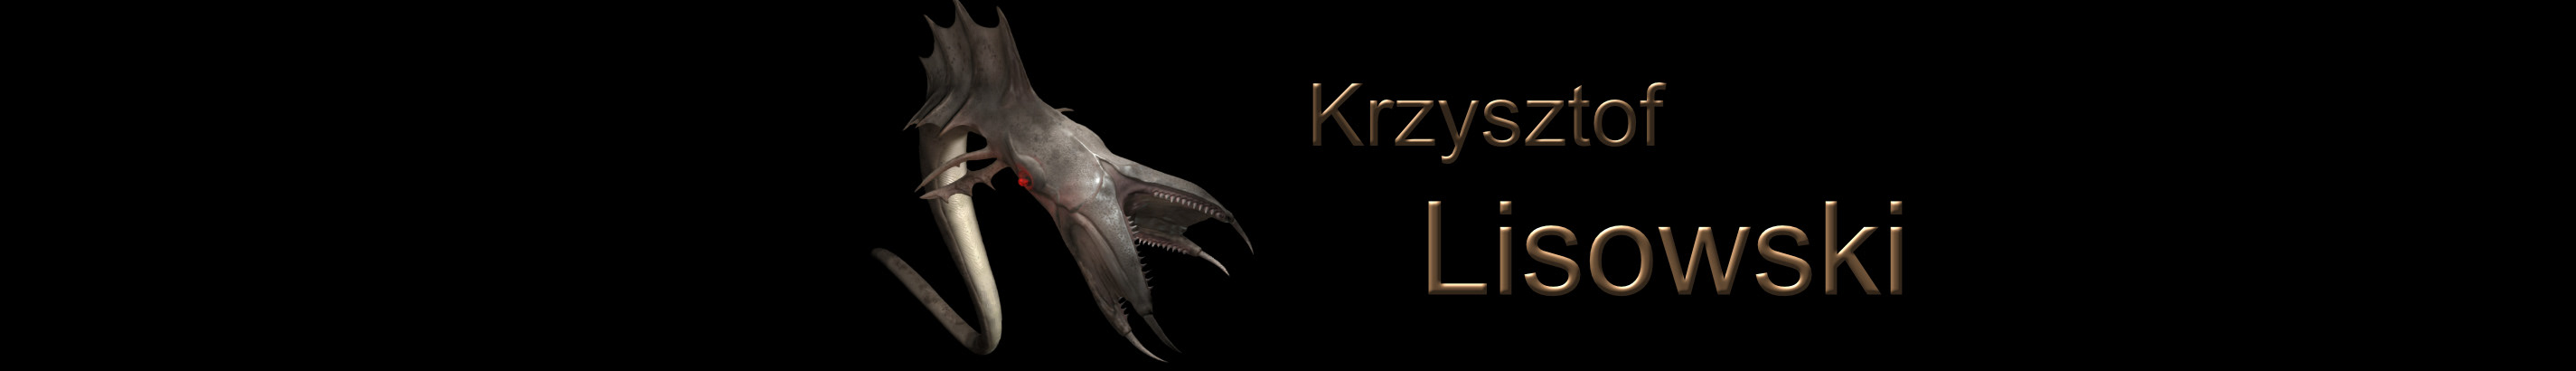 Krzysztof Lisowski's profile banner